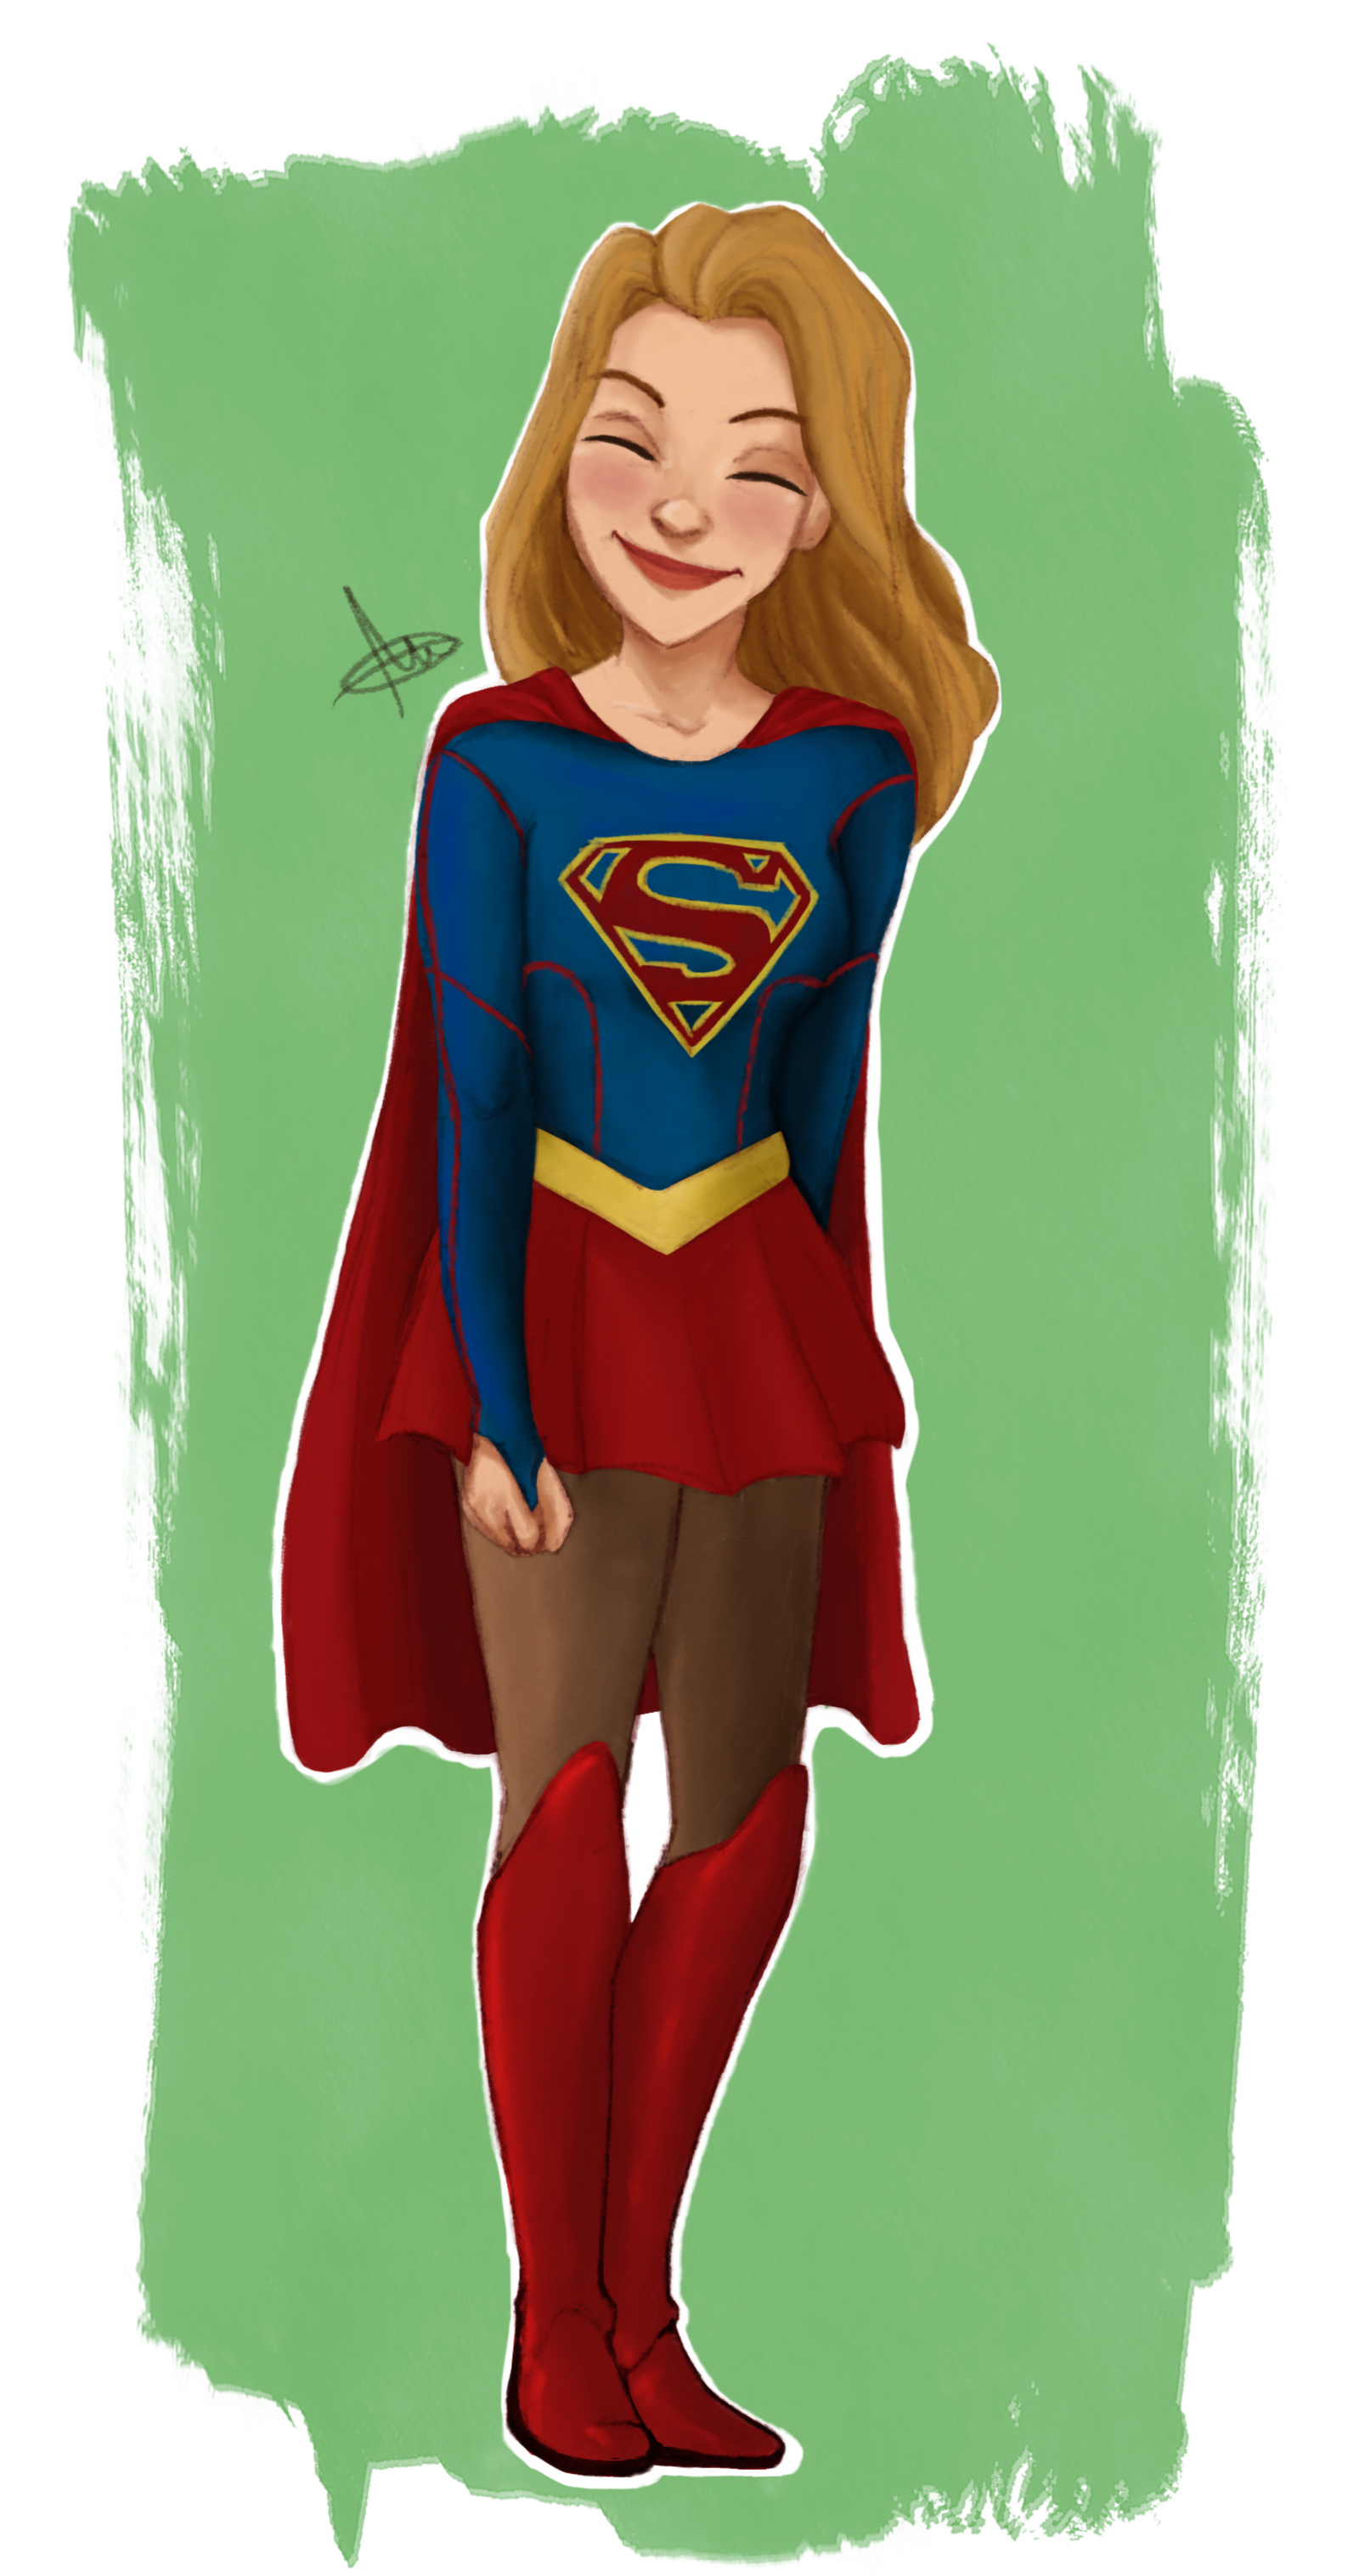 Cute Supergirl by alexmARTn8 on DeviantArt